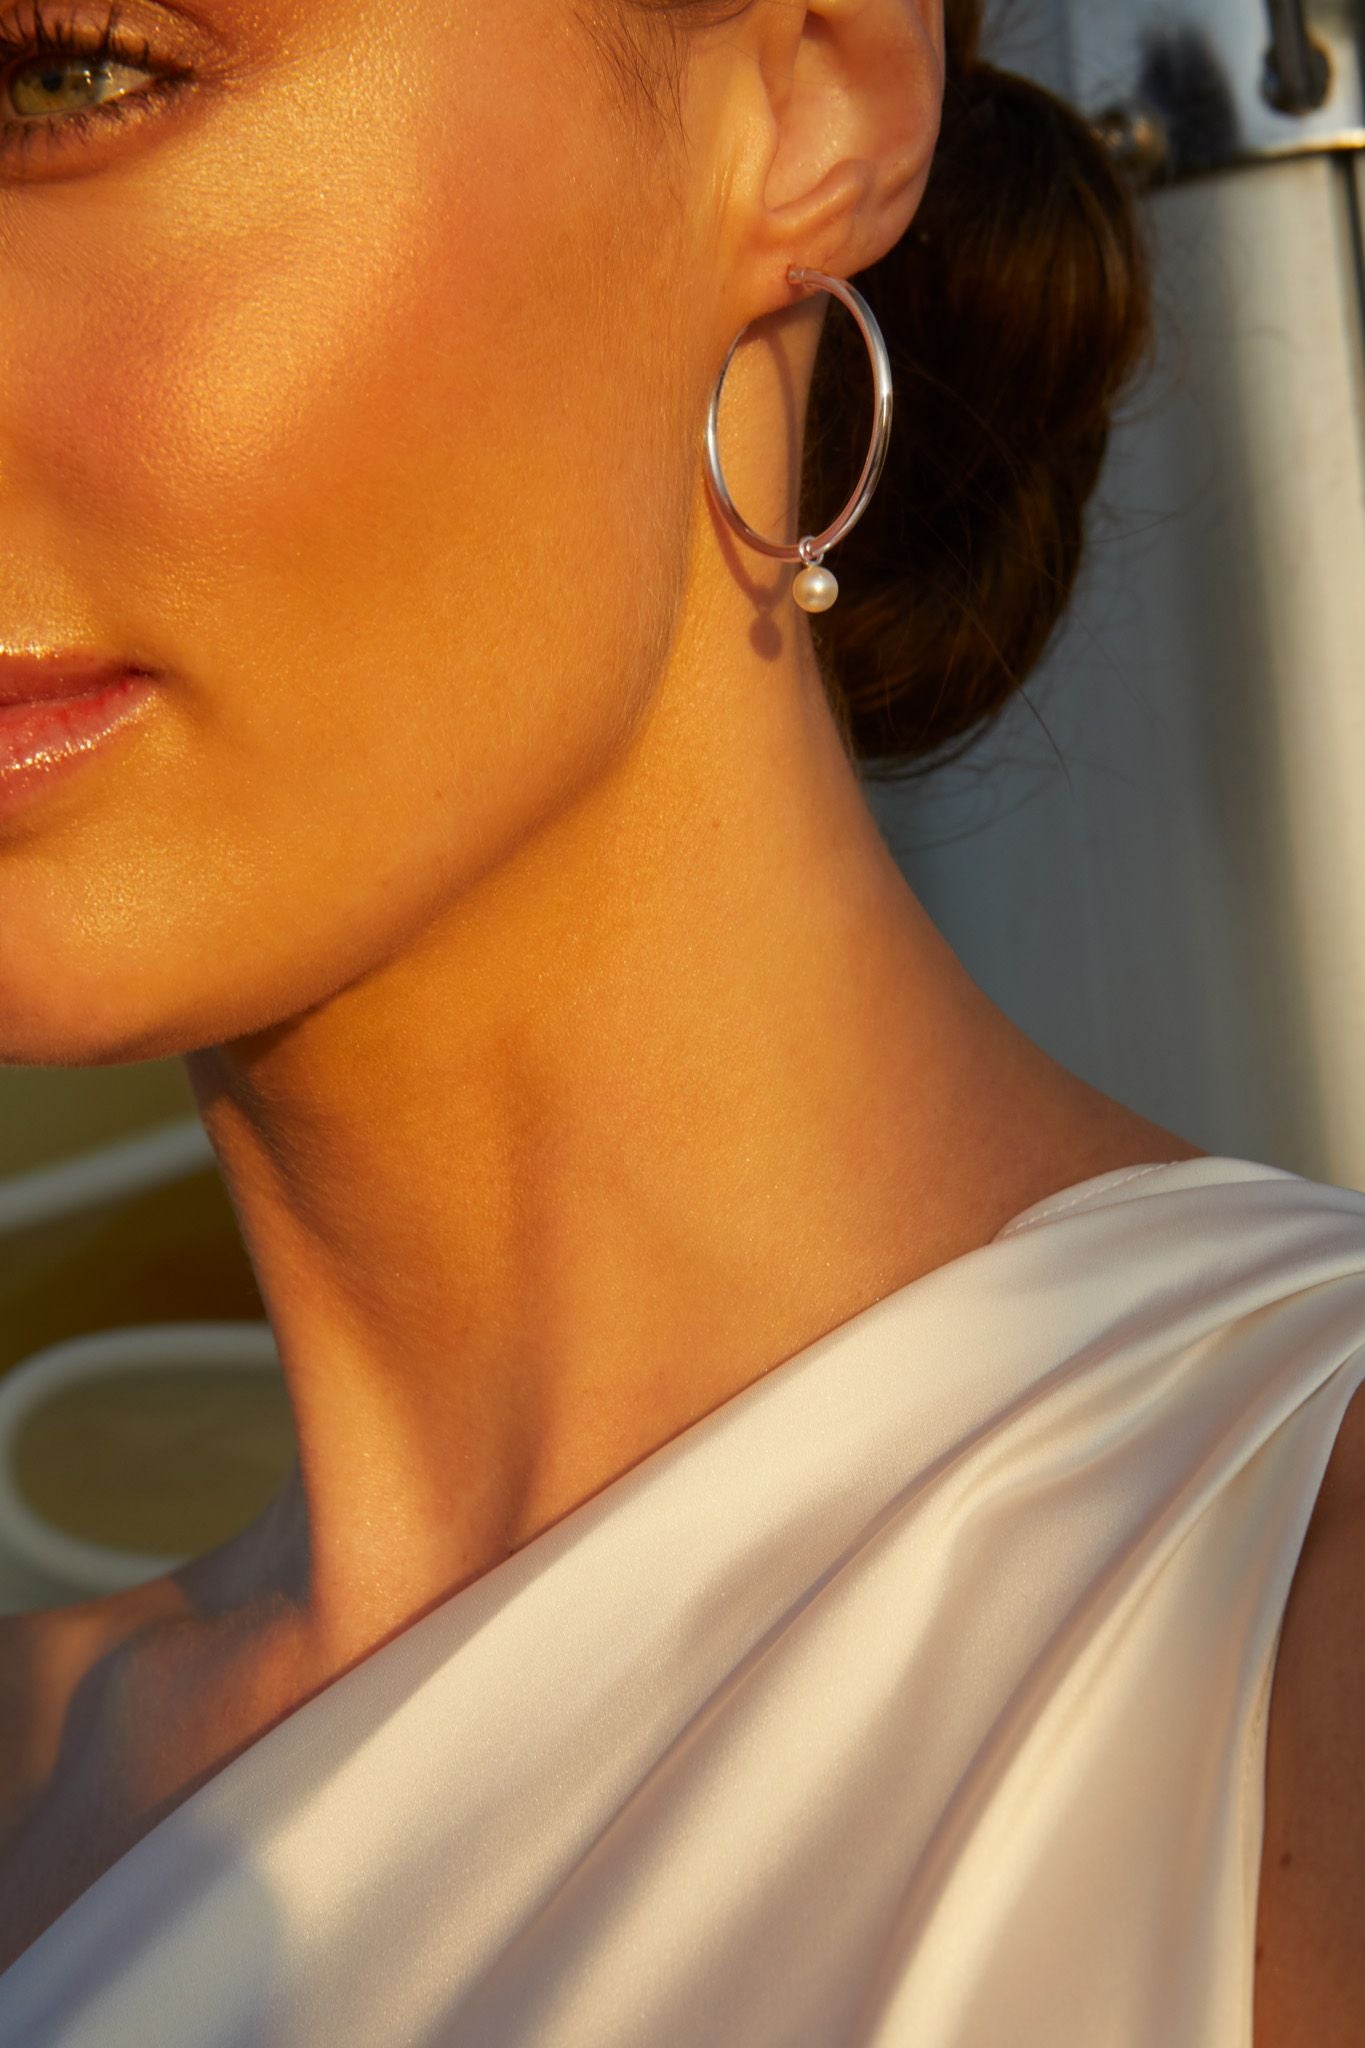 Chantilly Pearl Hoop Earrings in 9ct White Gold